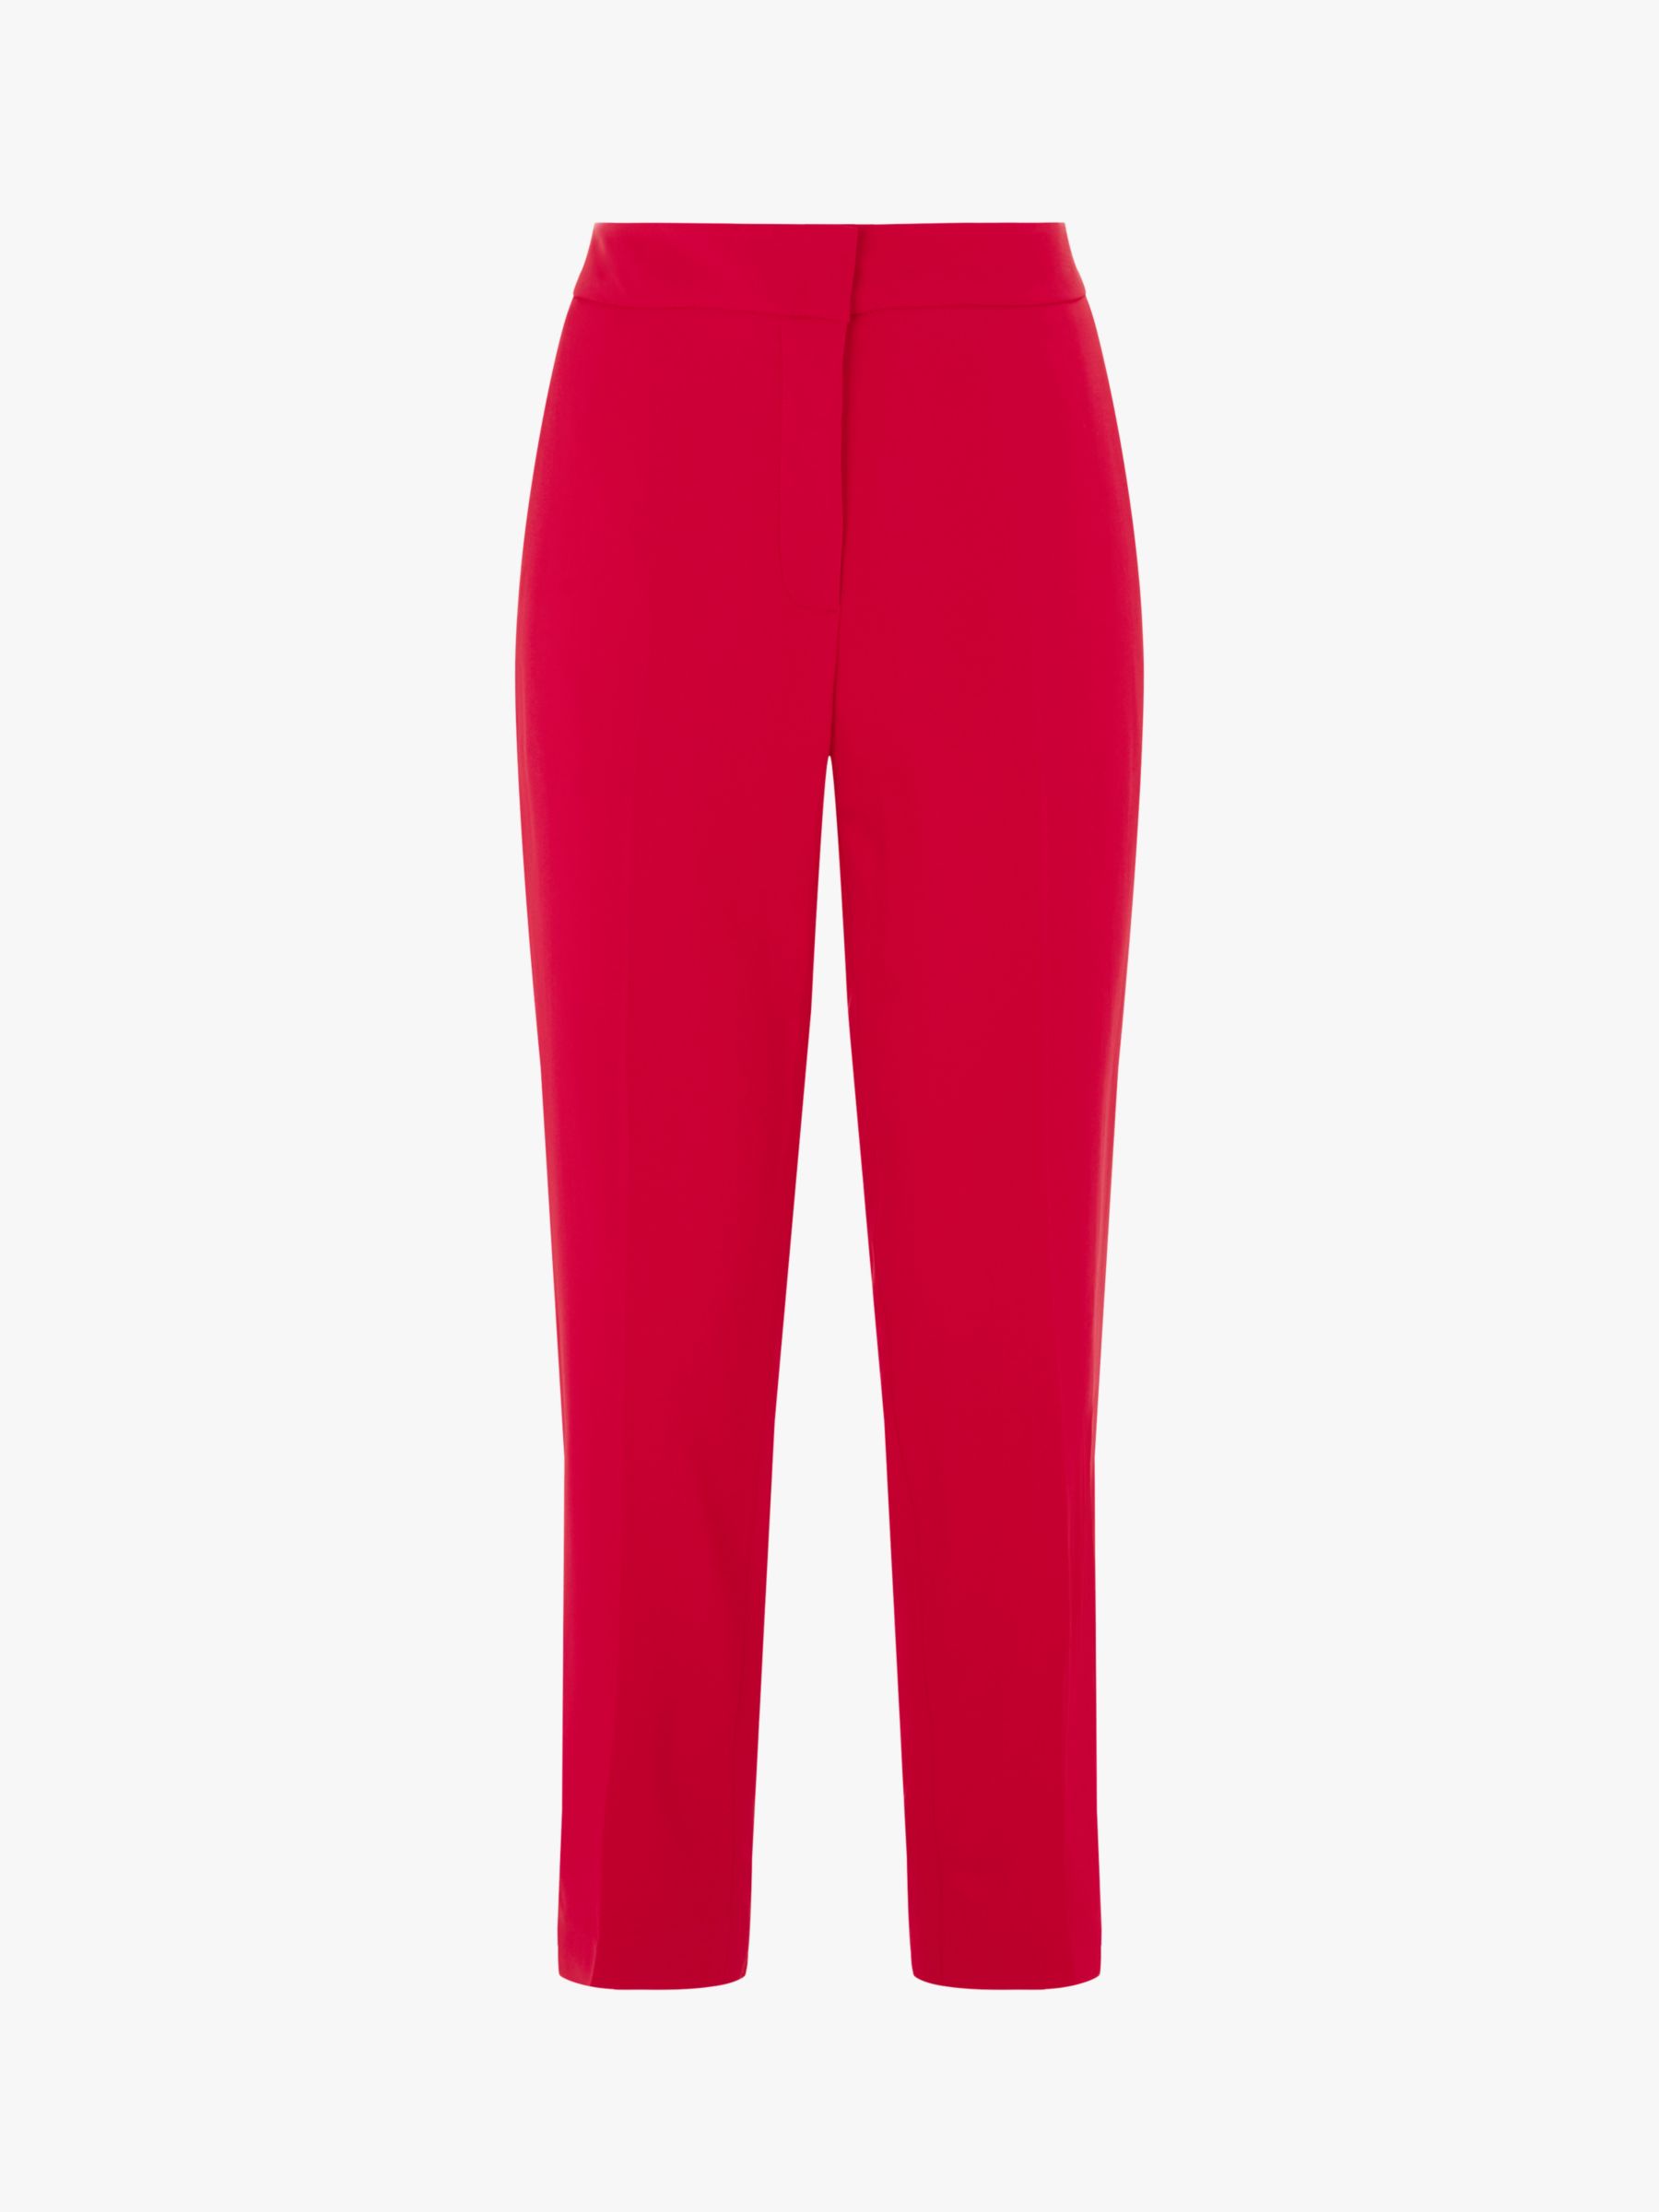 Fenn Wright Manson Rochelle Tailored Trousers, Pink